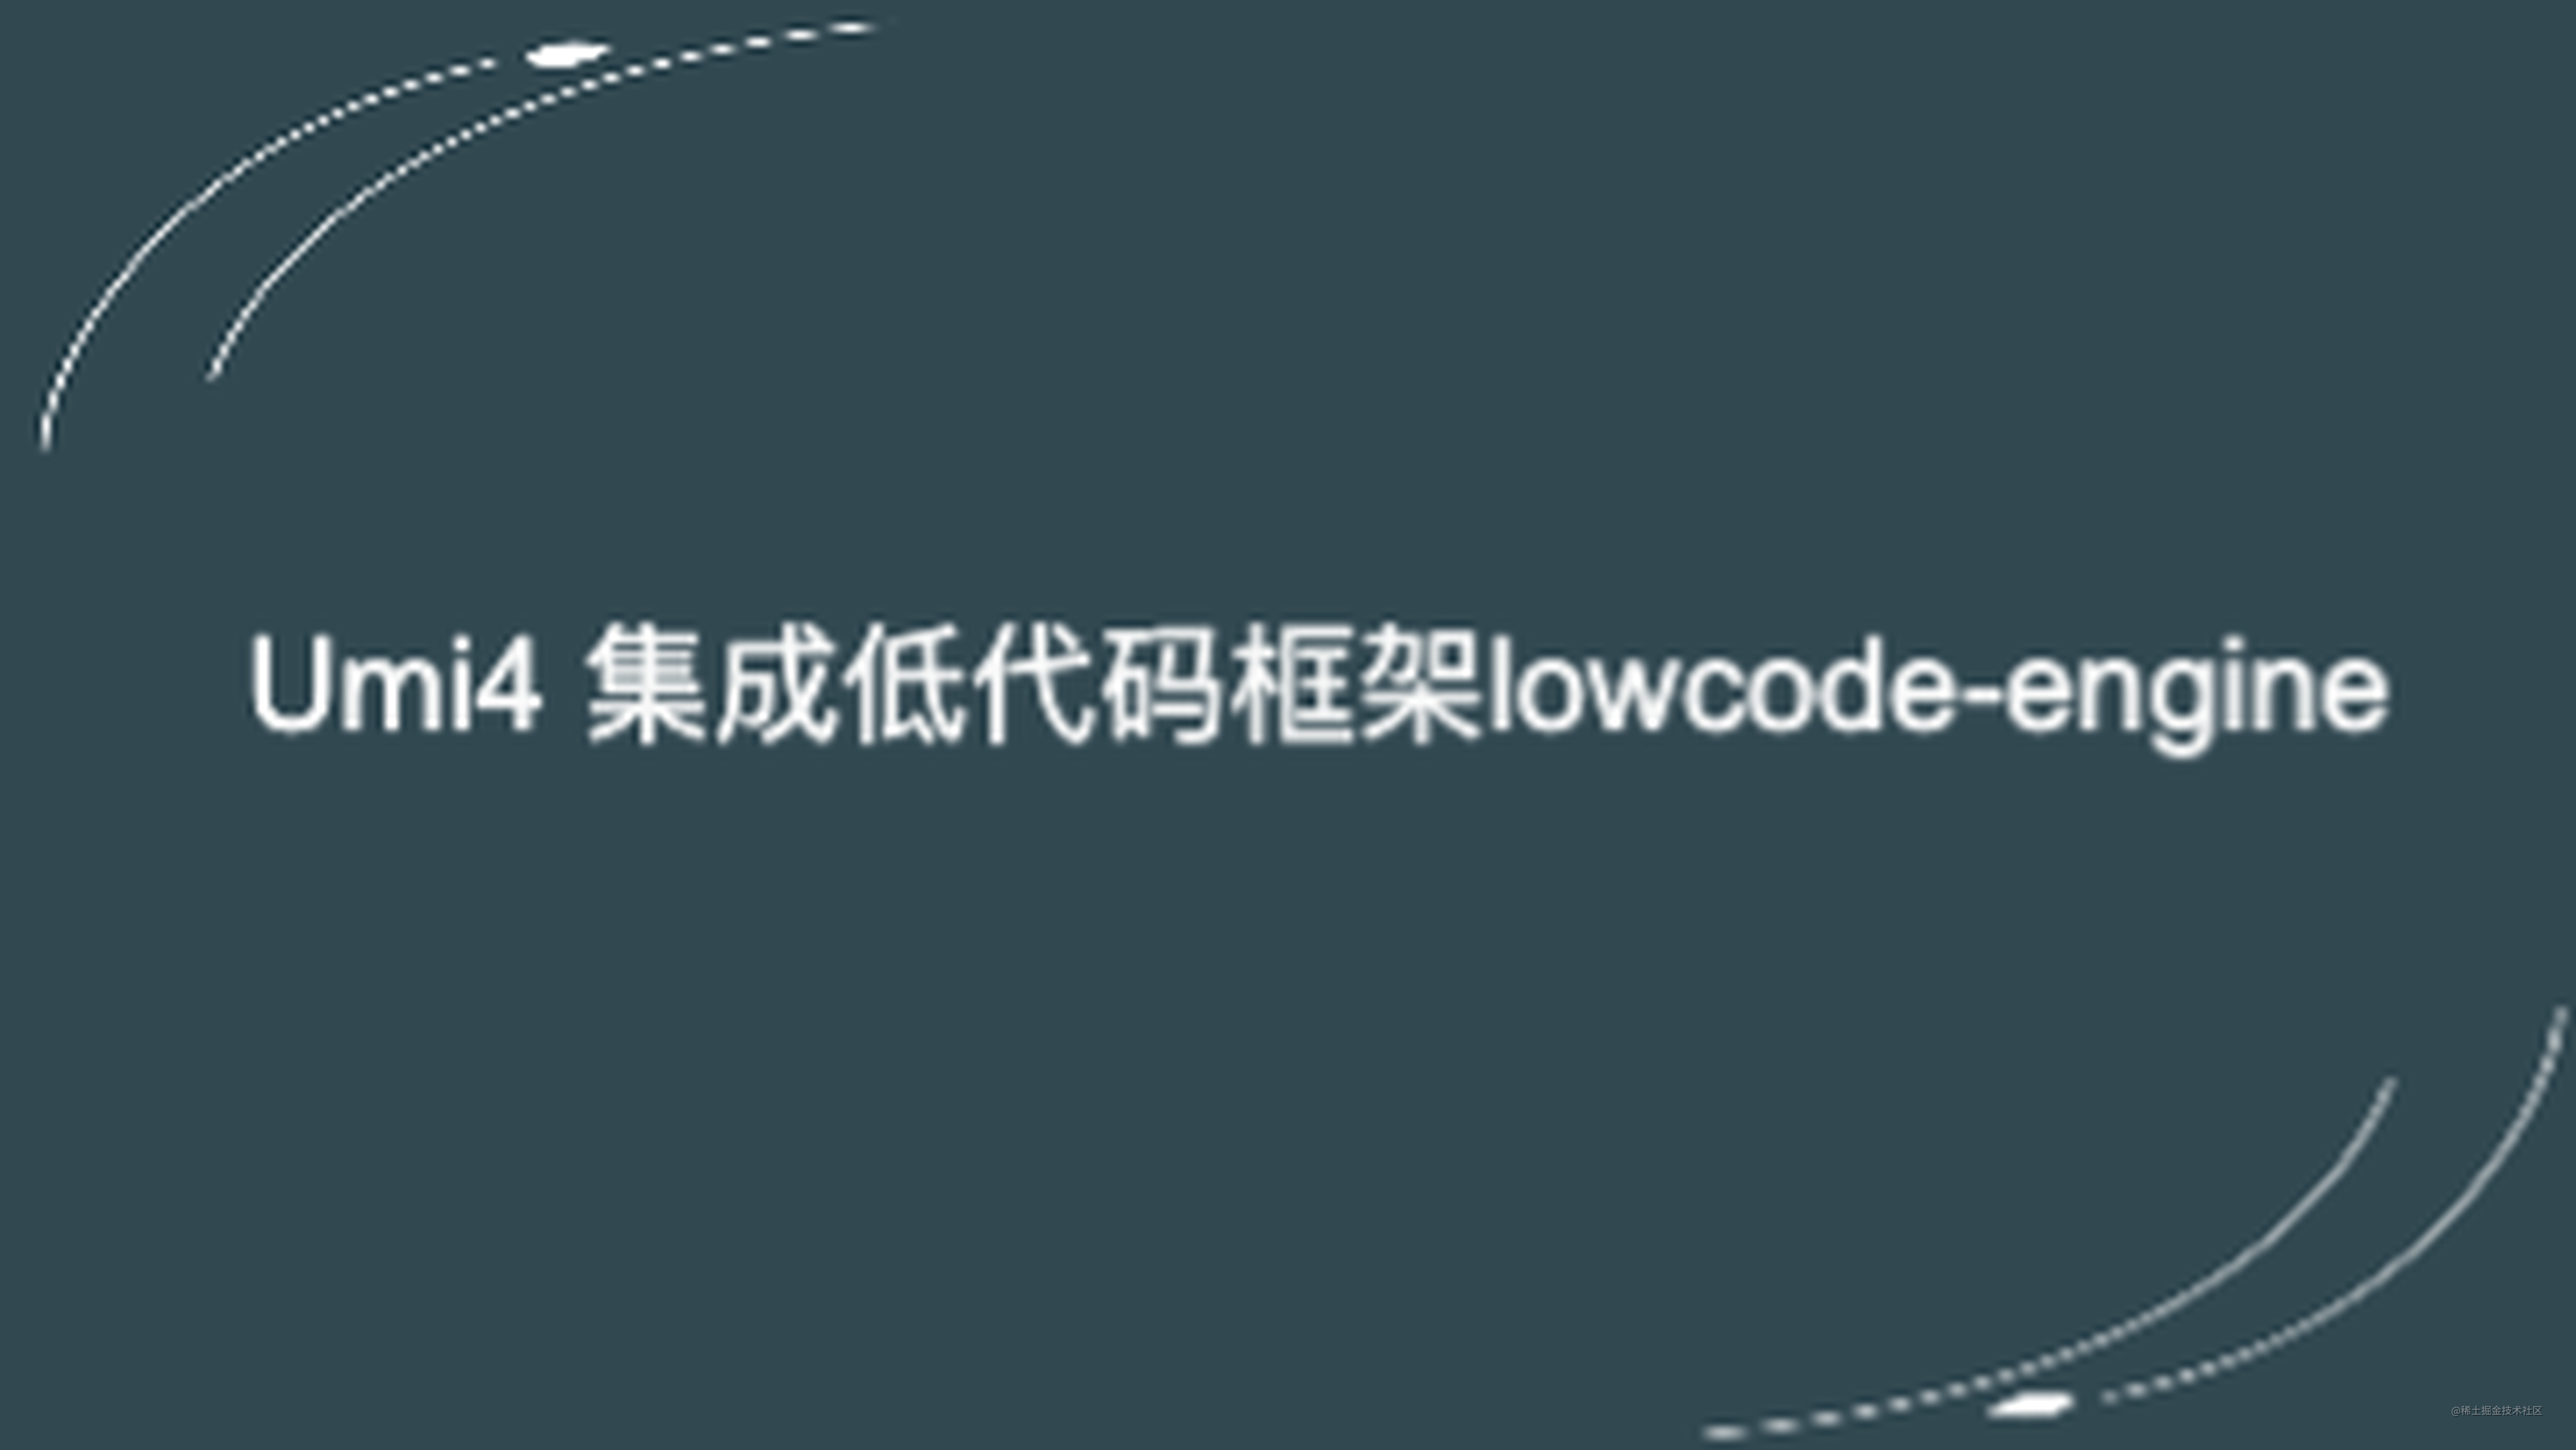 Umi4 集成阿里低代码框架lowcode-engine